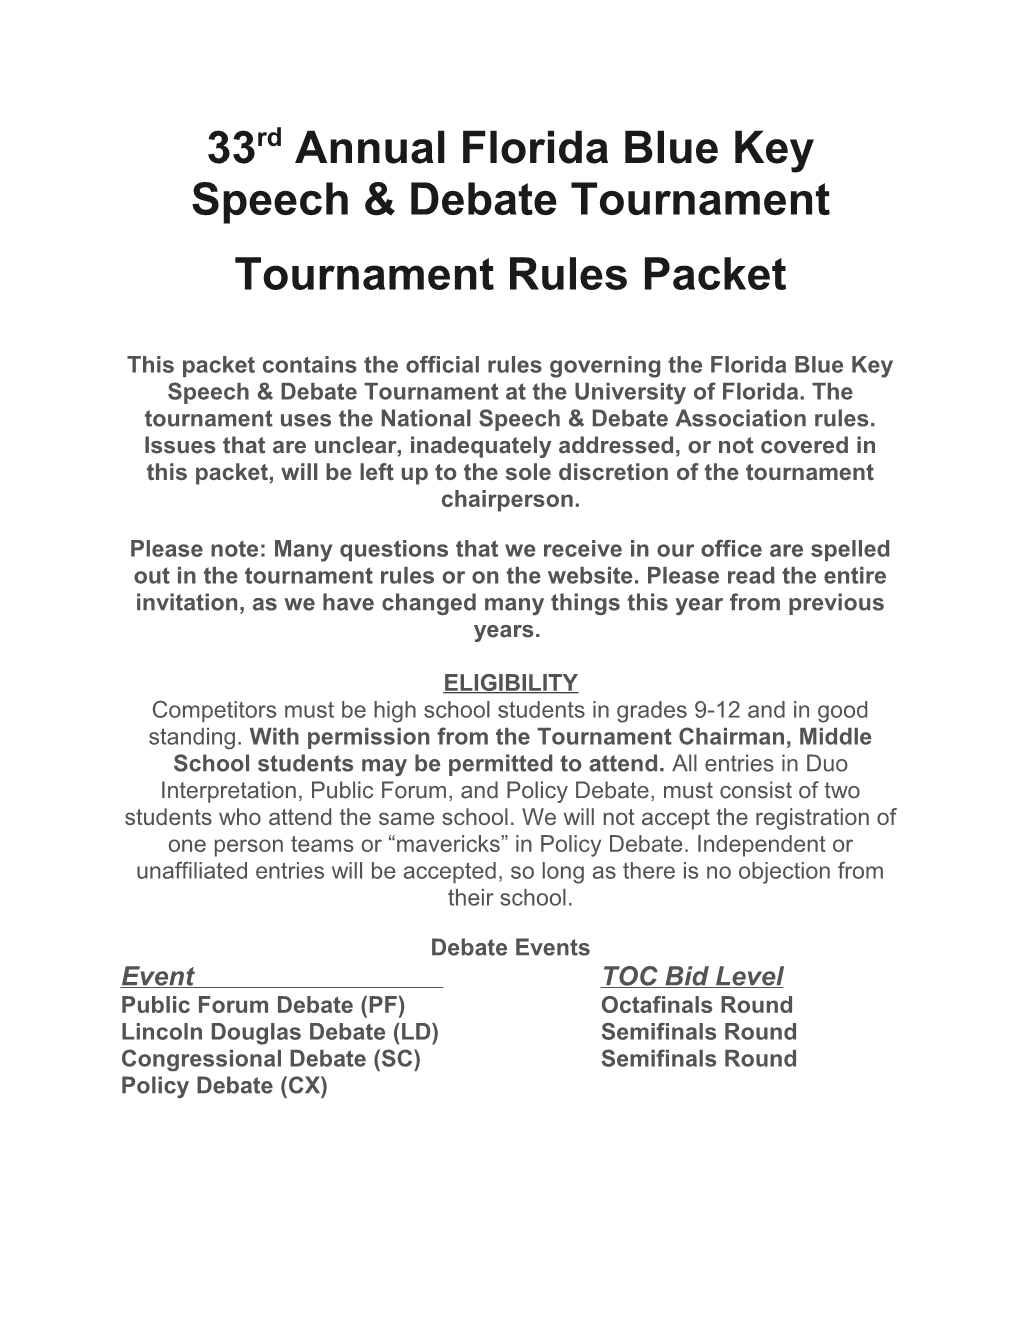 33Rdannual Florida Blue Key Speech & Debate Tournament